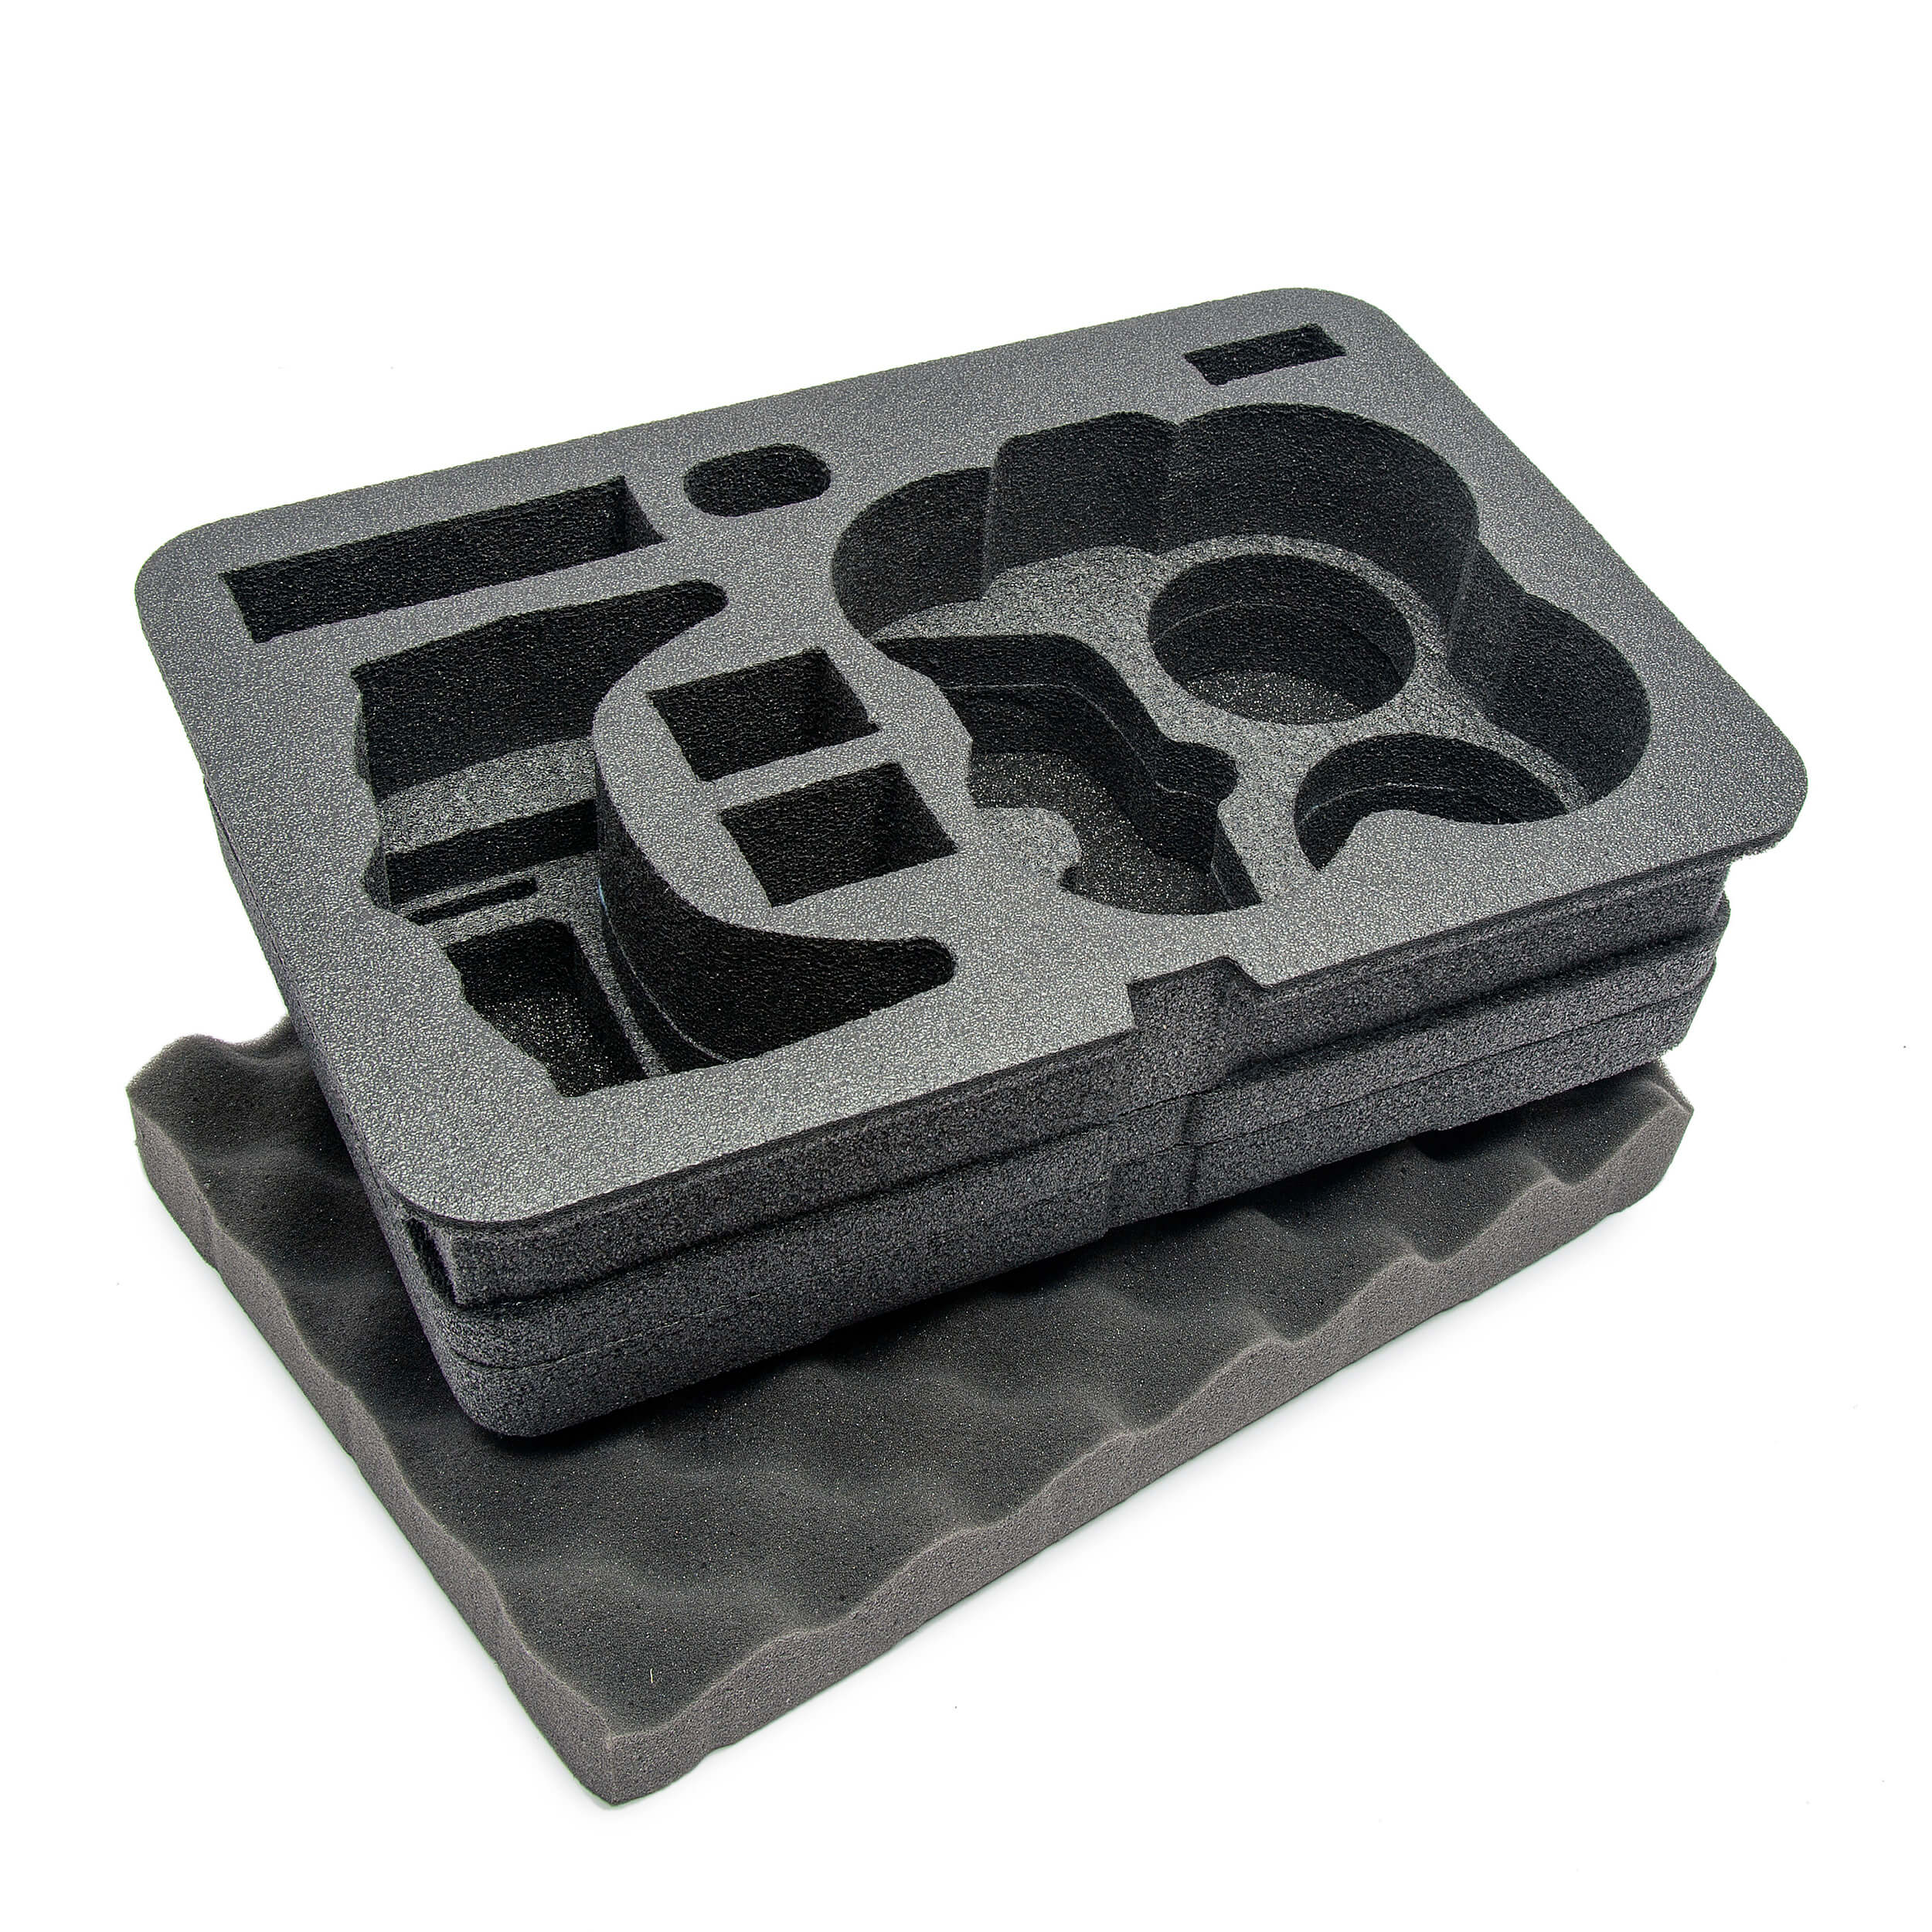 ​Choosing Replacement Foam for your Gun Case - Carolina Custom Foam